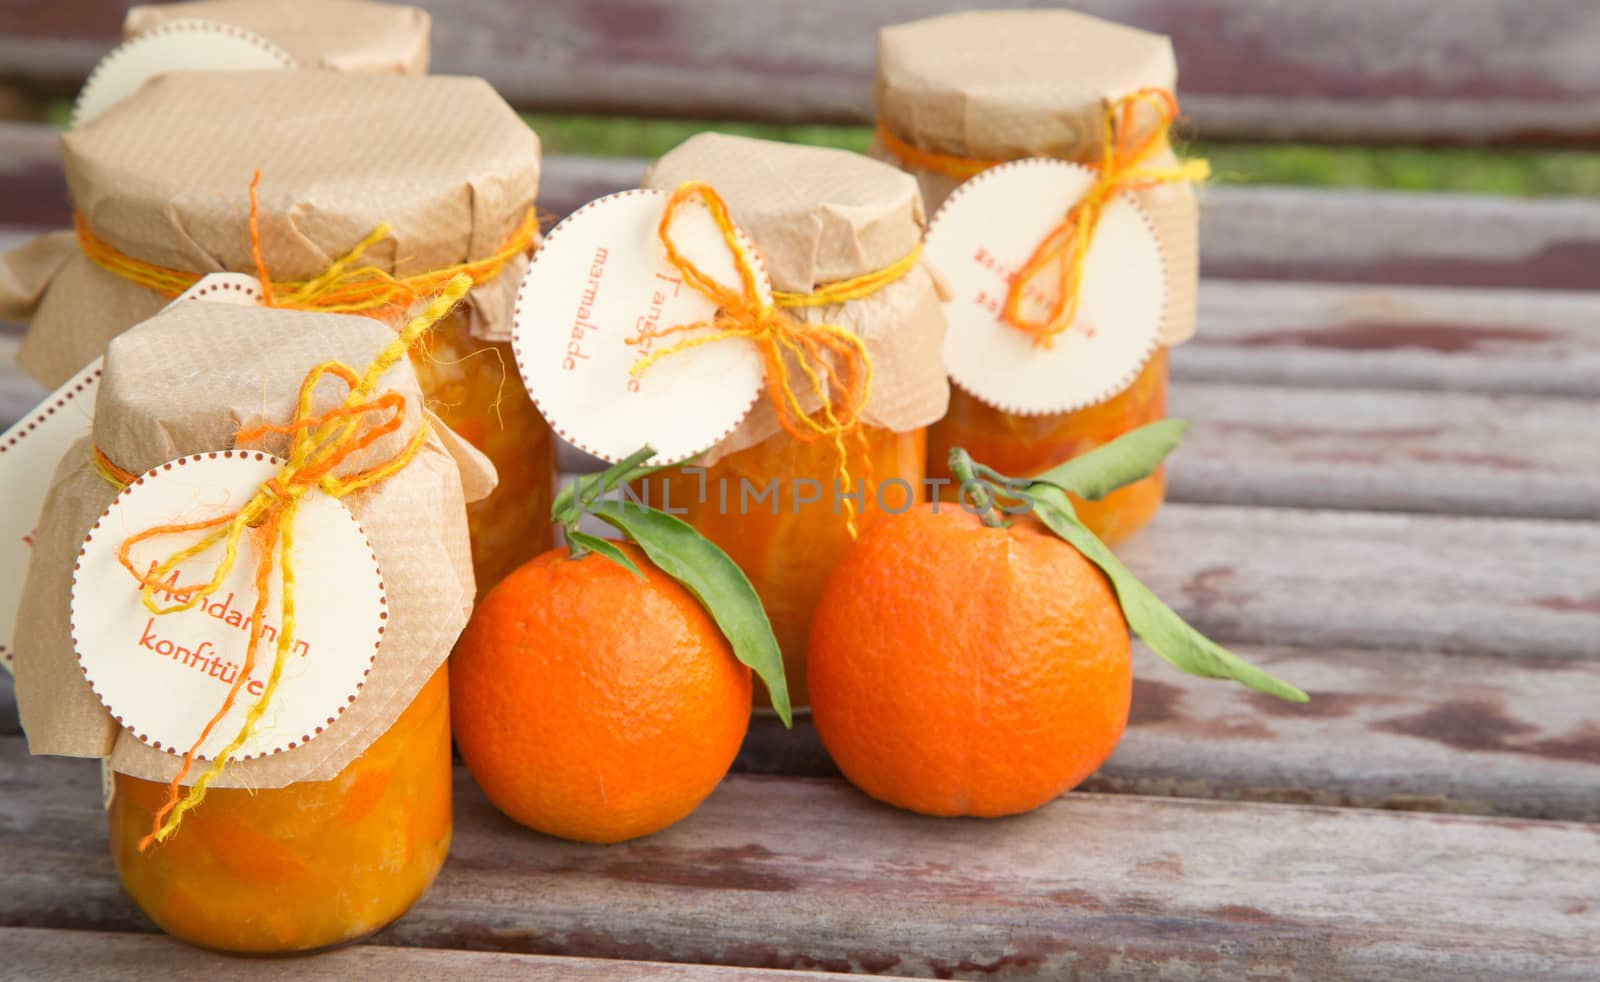 Homemade tangerine marmalade by tolikoff_photography